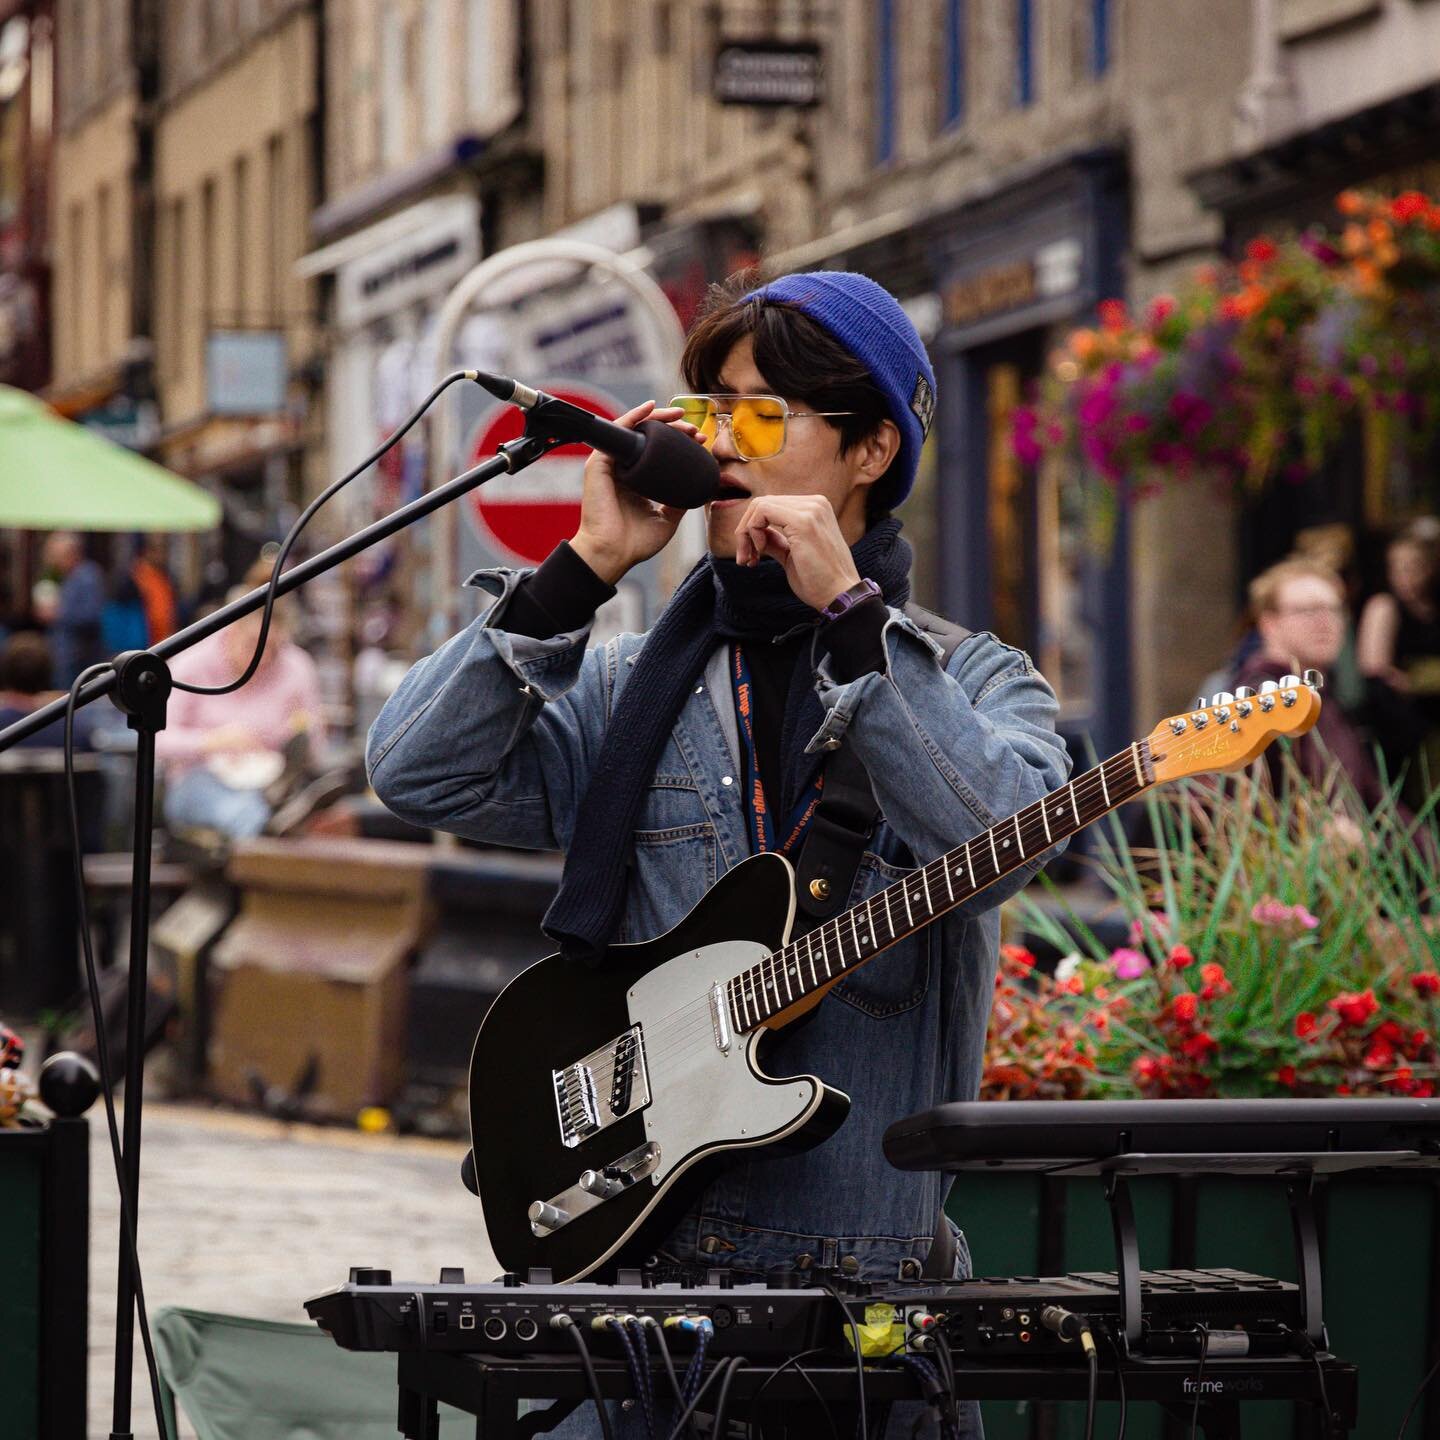 Joje playing live in Edinburgh @kim_younggi_joje

@kim_younggi_joje #scotland #edinburgh #visitscotland  #roaminscotland #scotlandiscalling #explorescotland #scottishhighlands  #hiking #travel #backpacking #solotraveller #uk #canon #r5  #travelphotog